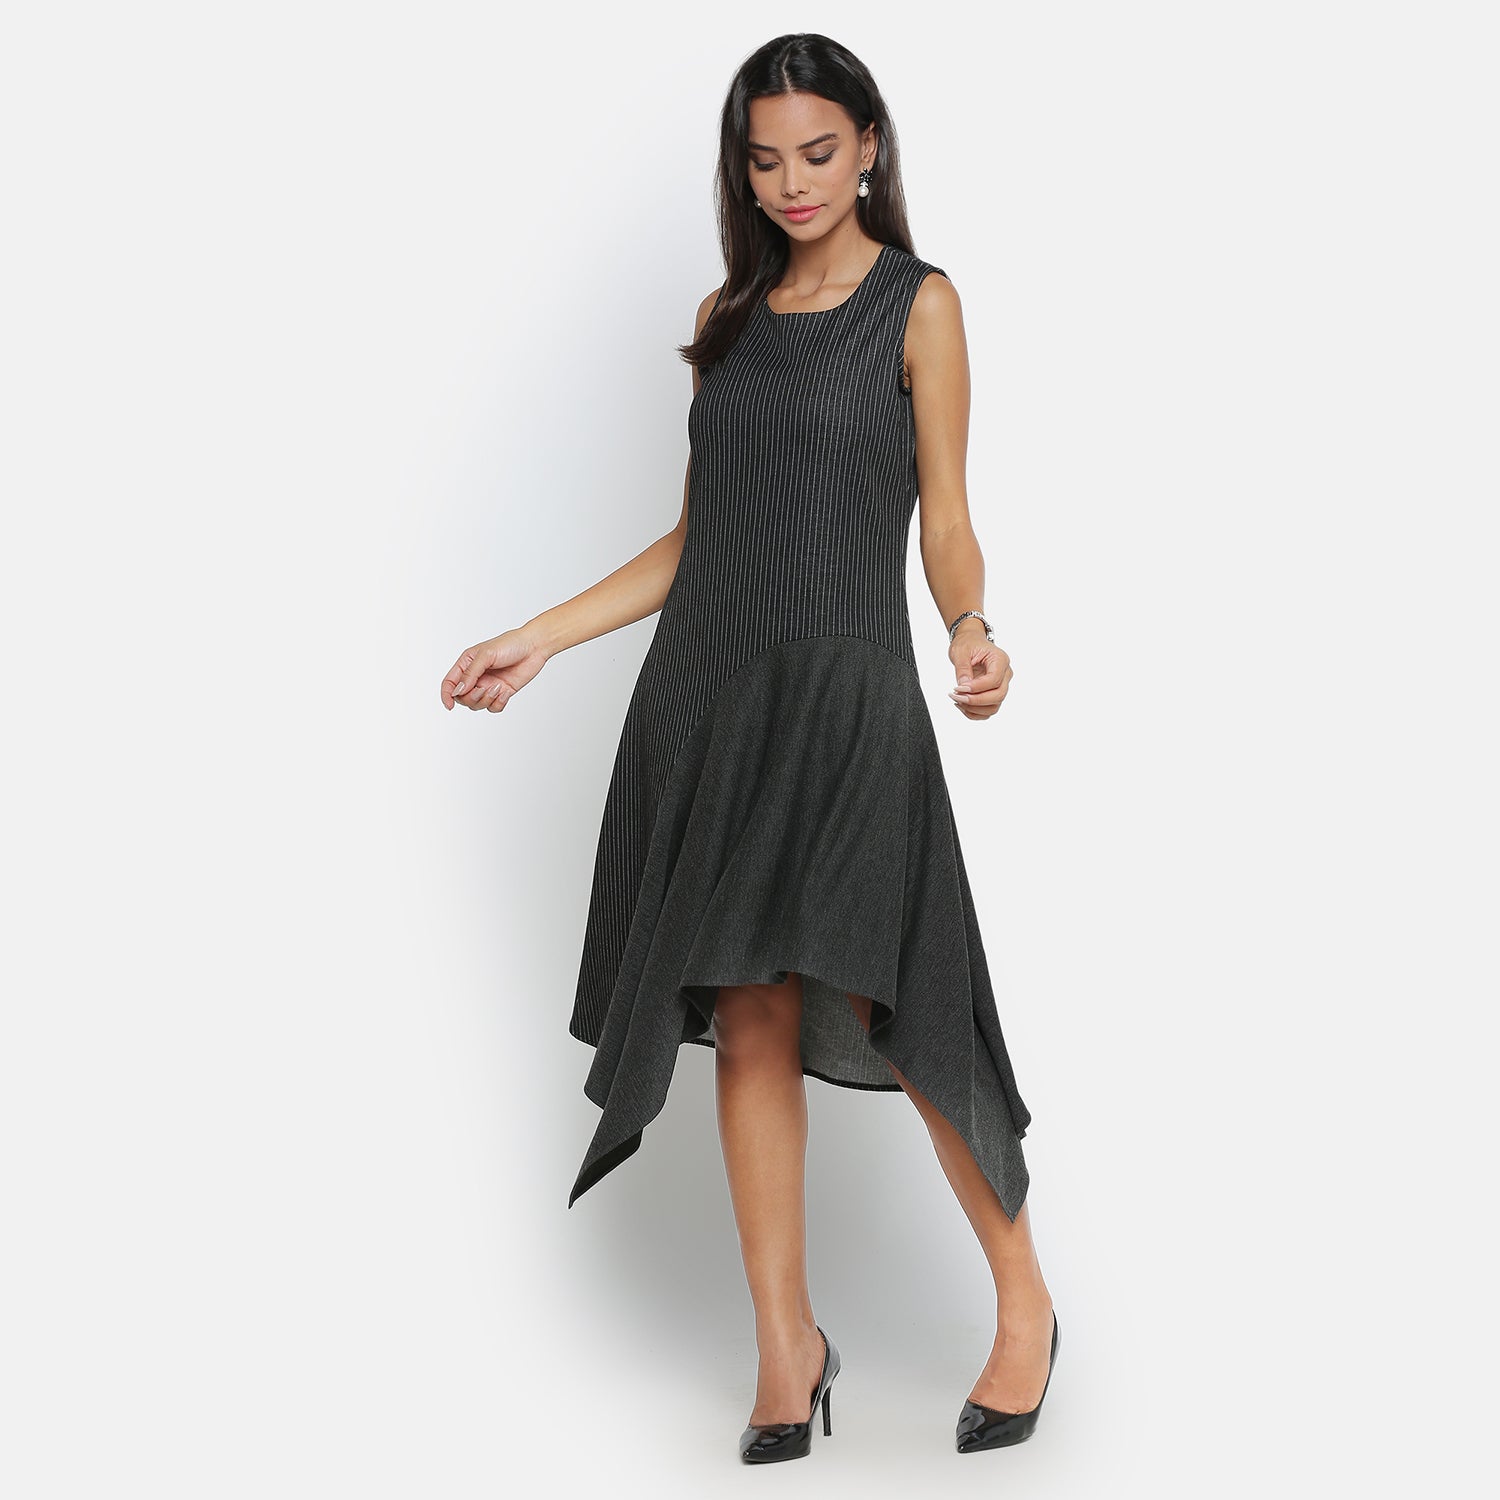 Black line & dark grey asymmetric dress